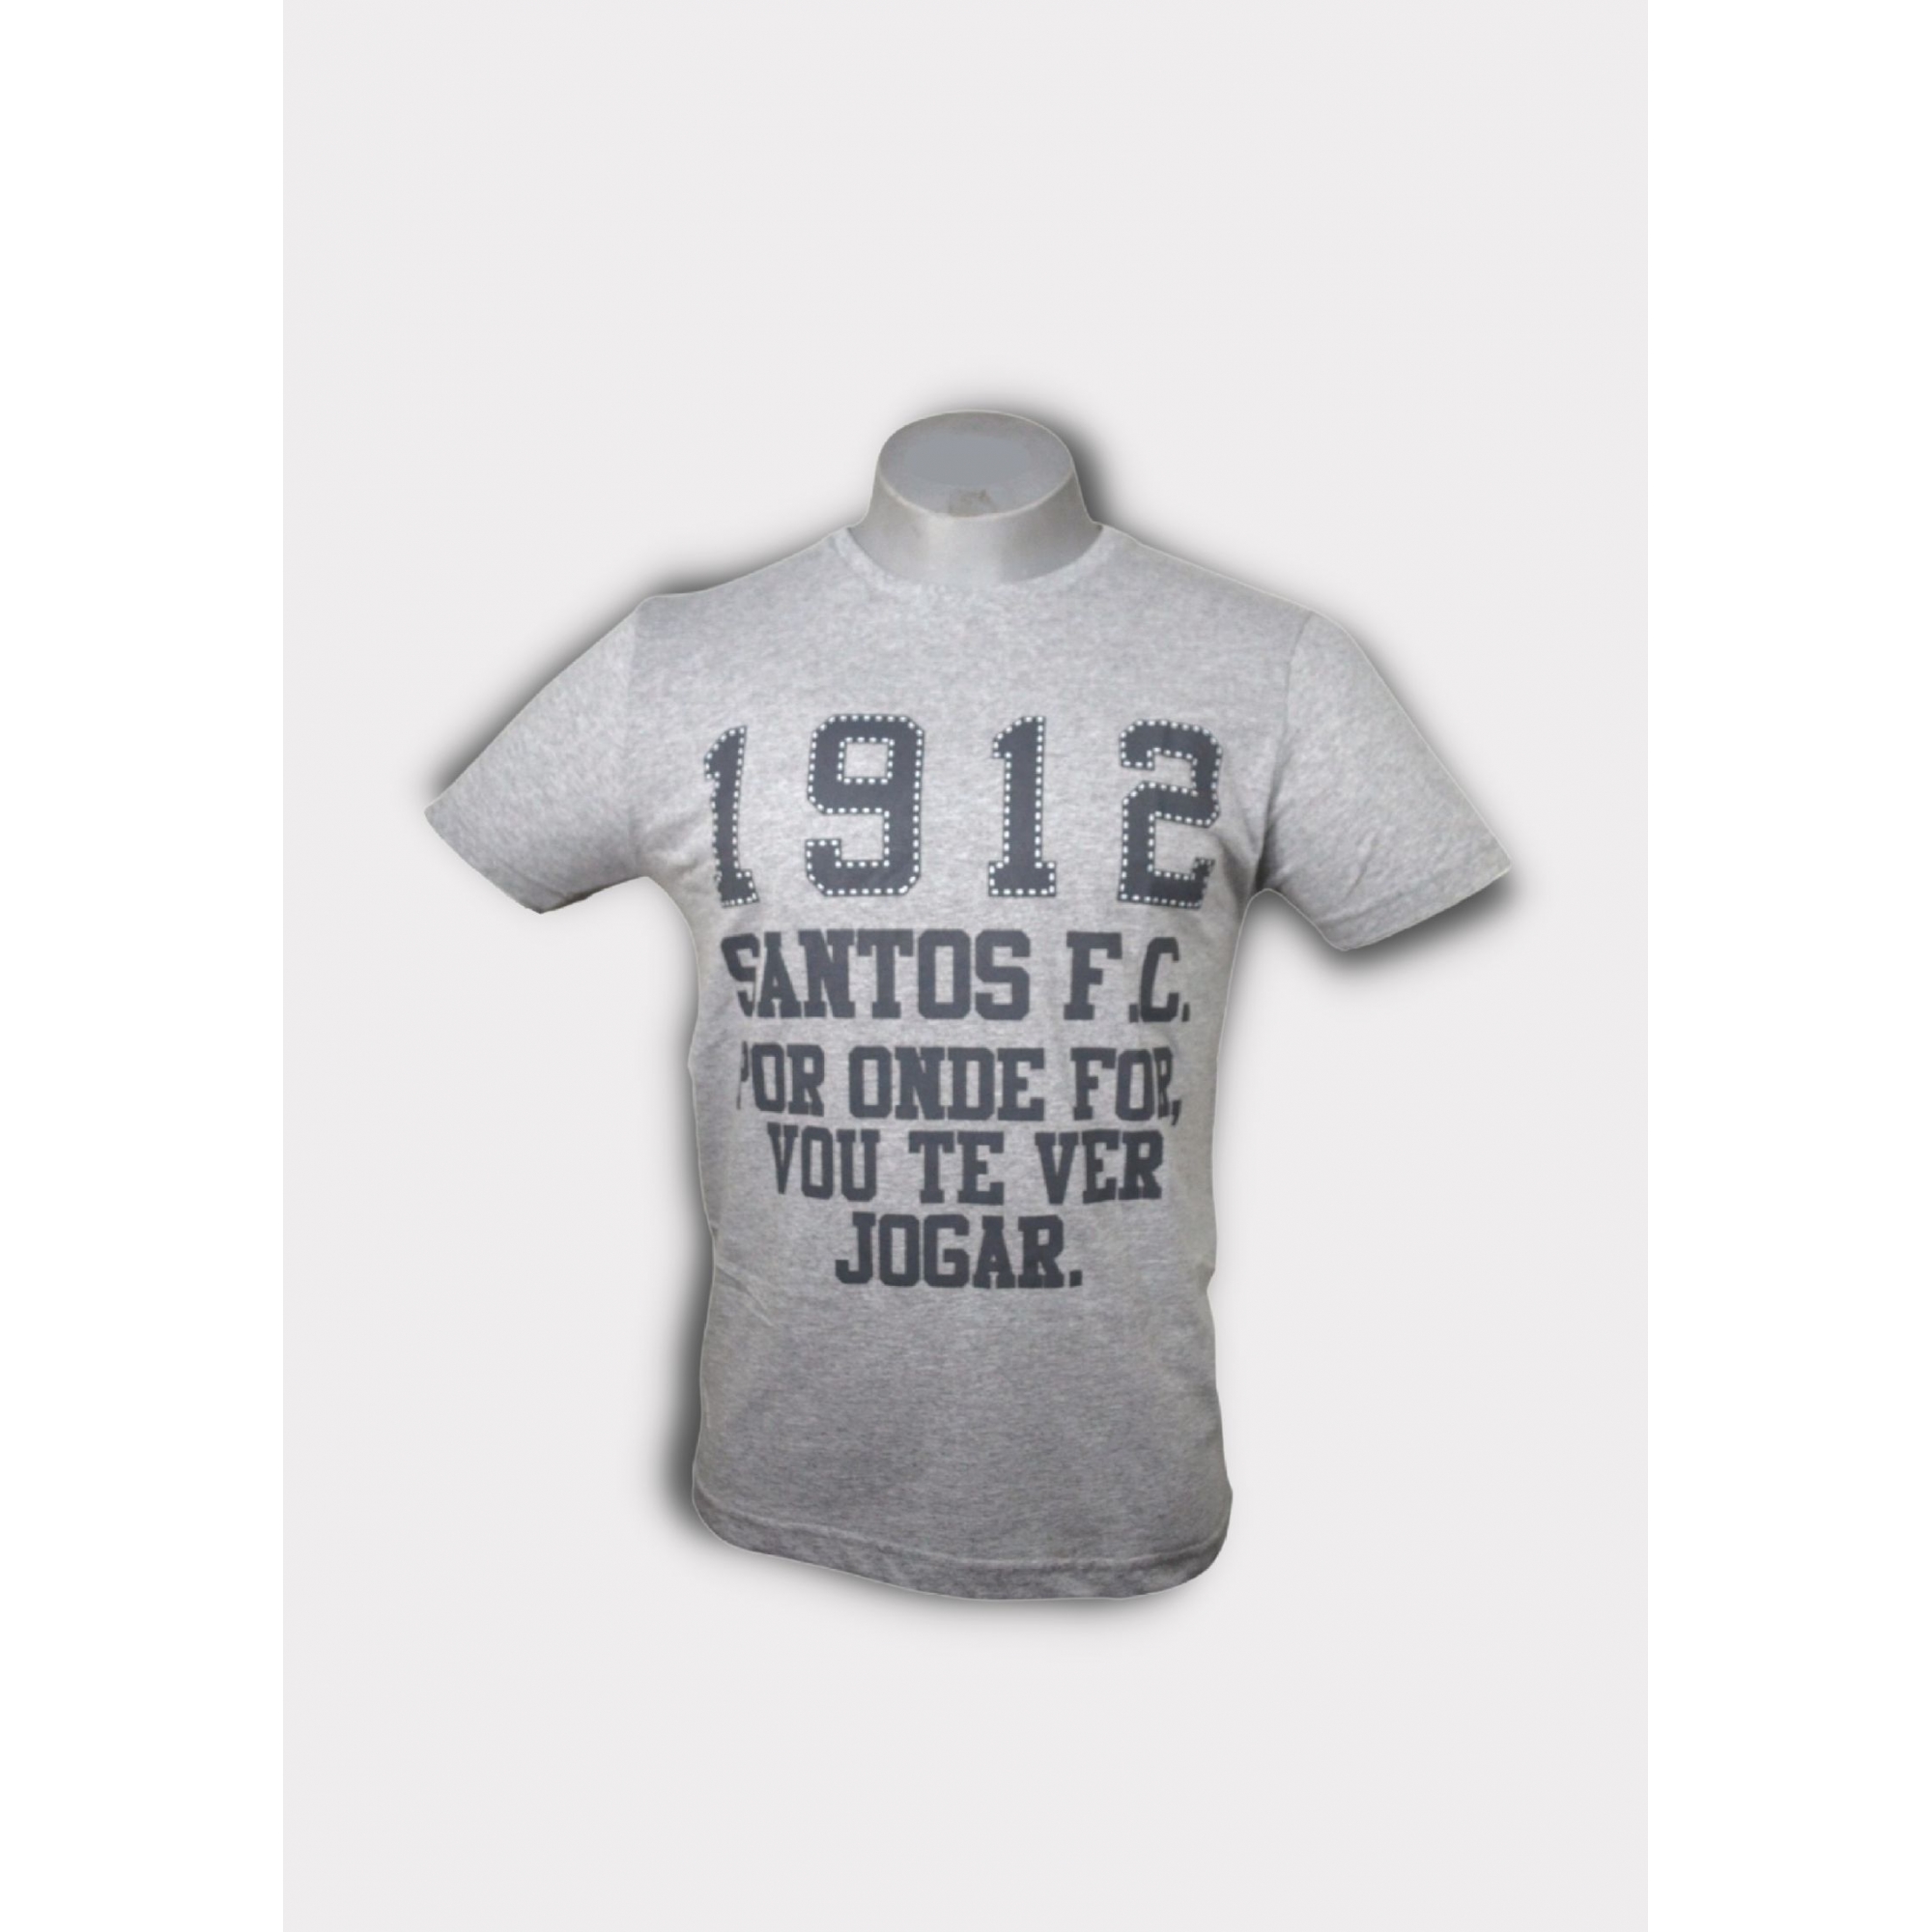 Camisa Santos FC 1912 1gdp